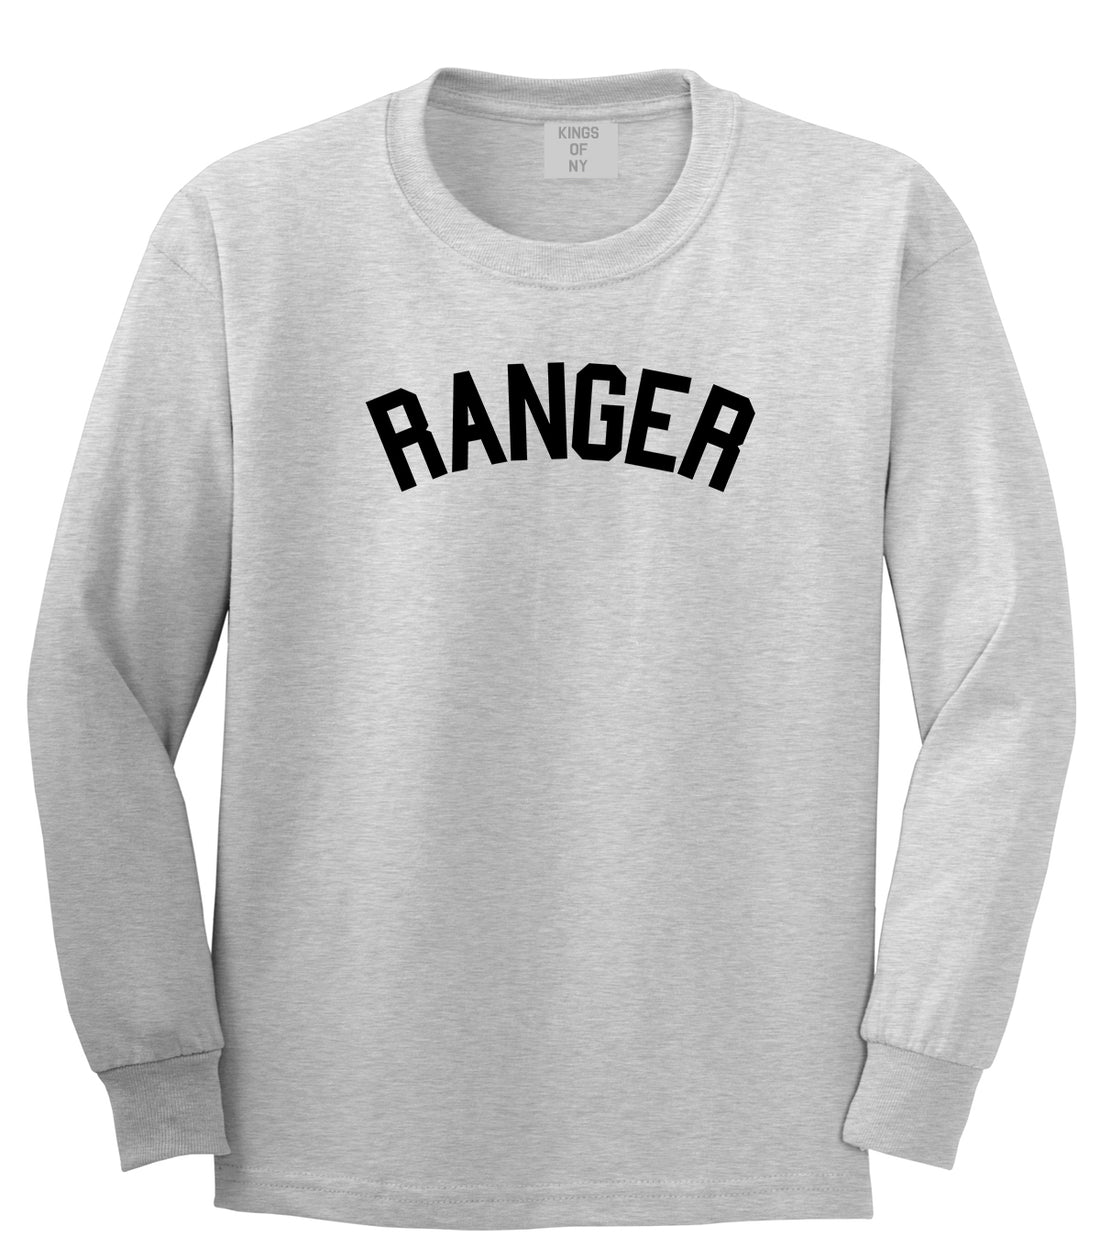 Ranger Mens Grey Long Sleeve T-Shirt by Kings Of NY